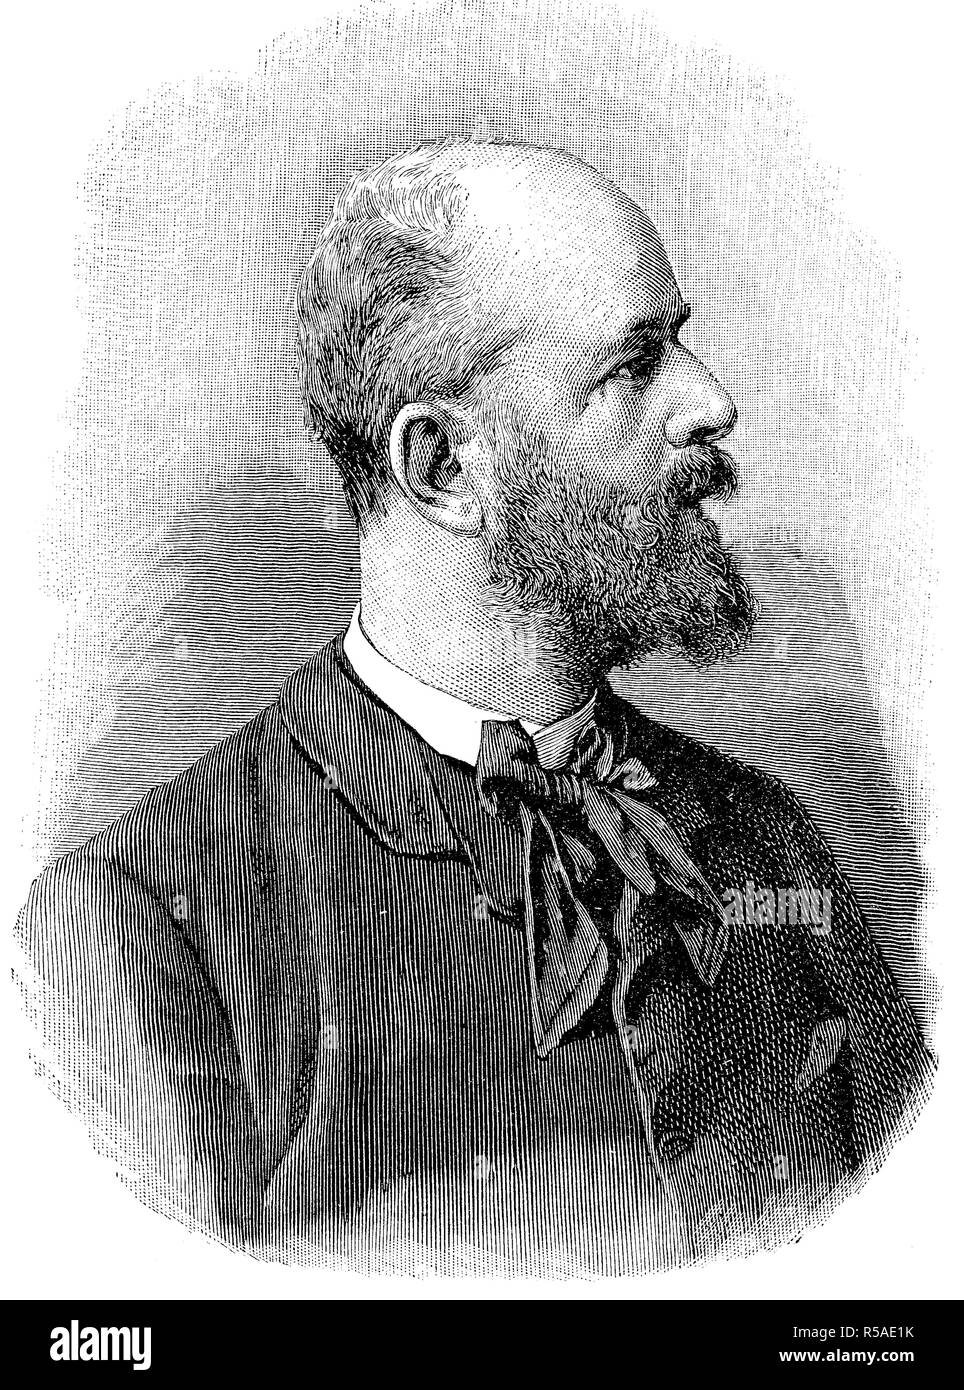 Arthur Gundaccar von Suttner, February 21, 1850, December 10, 1902, was an Austrian writer, woodcut from the year 1888, Germany Stock Photo